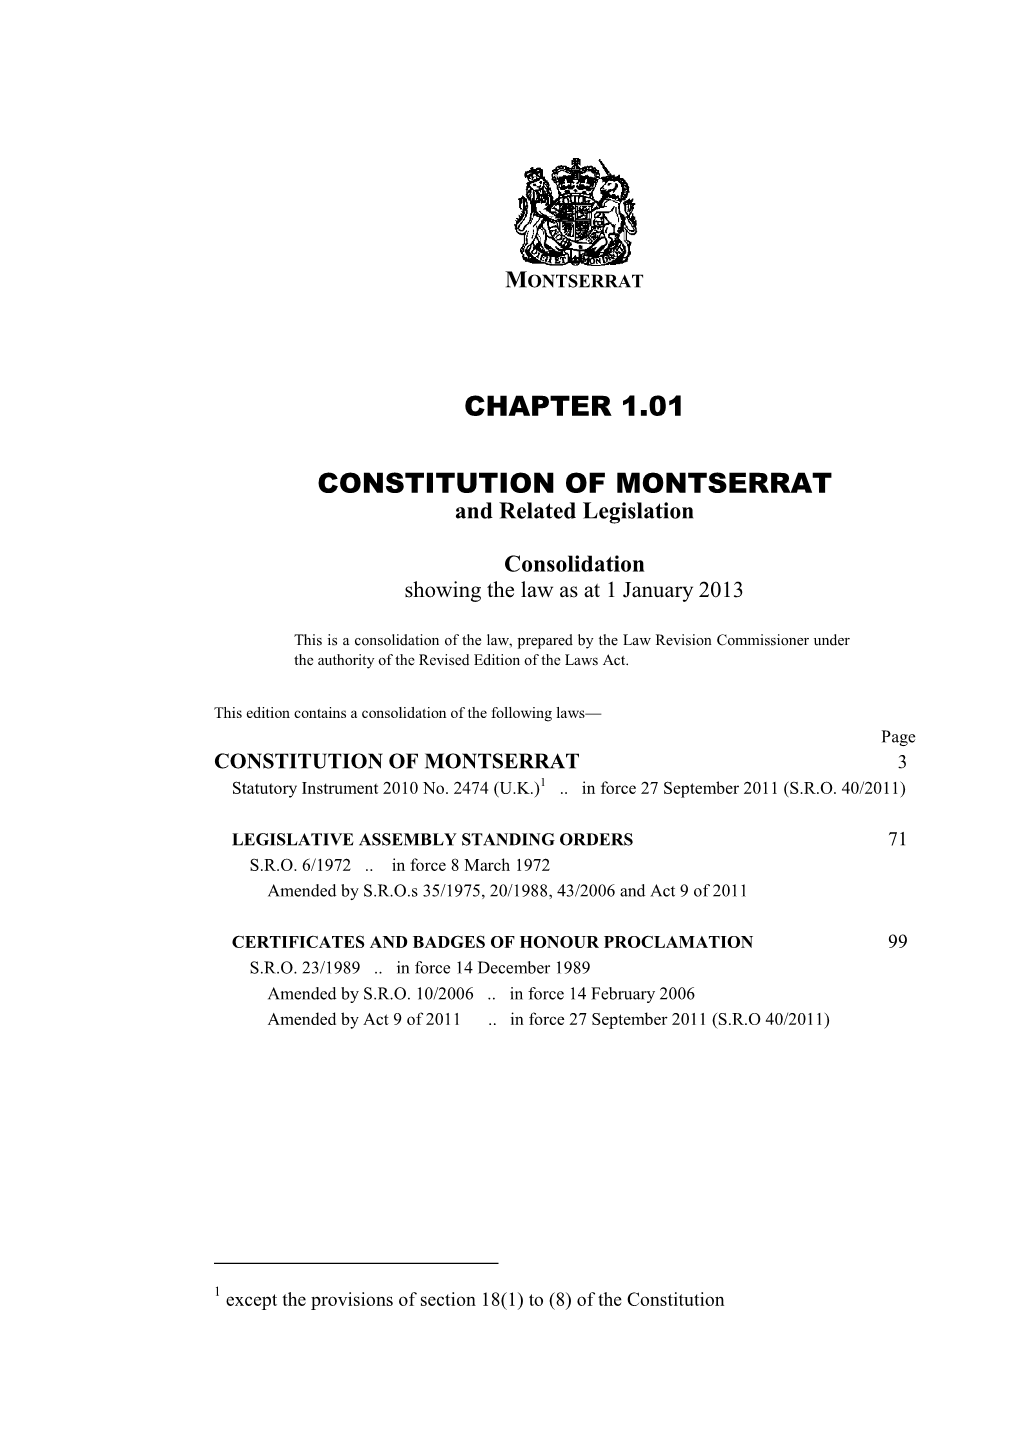 CONSTITUTION of MONTSERRAT and Related Legislation